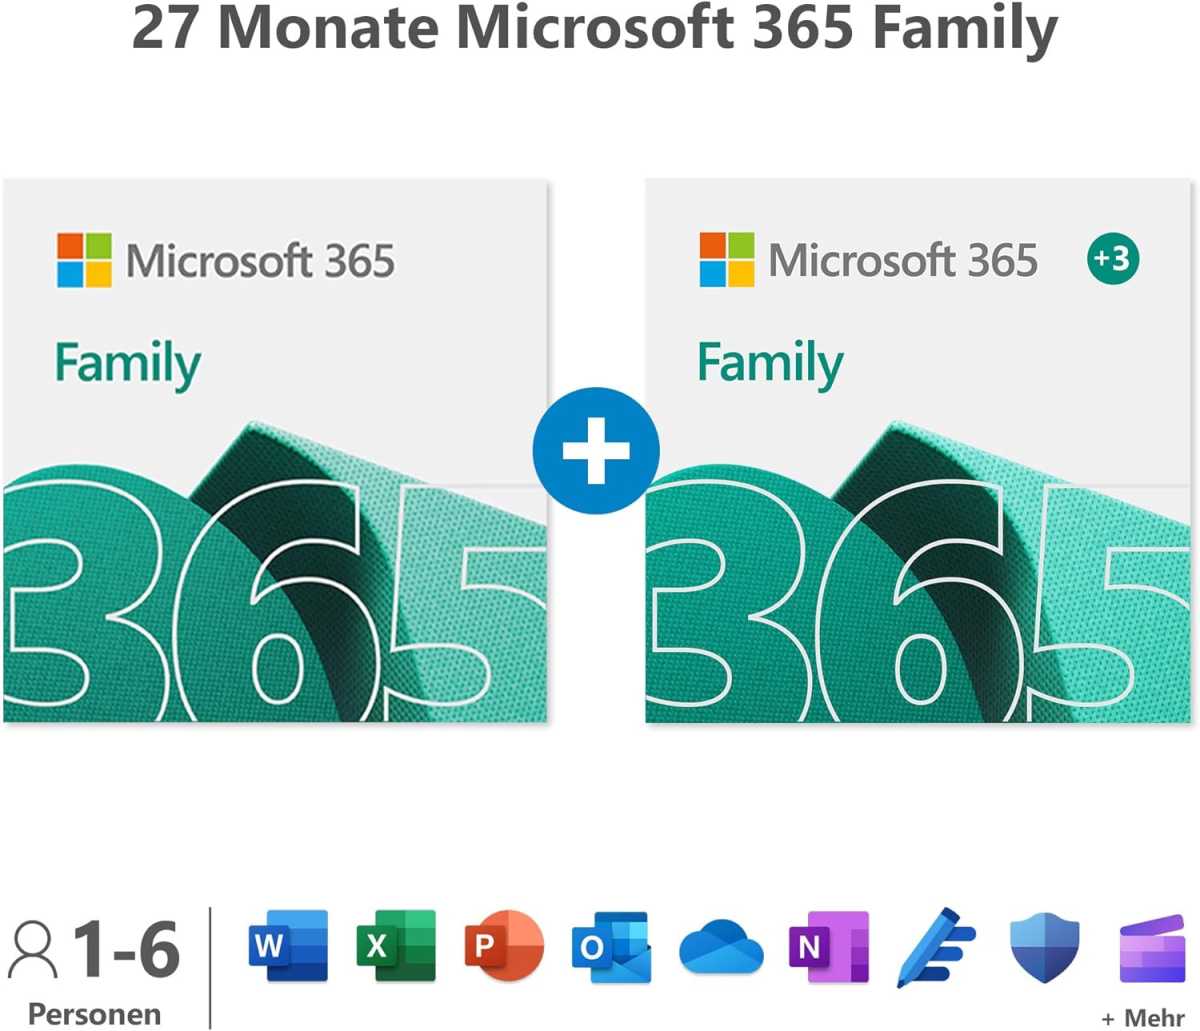 27 Monate Microsoft 365 Family zum Hammerpreis bei Amazon